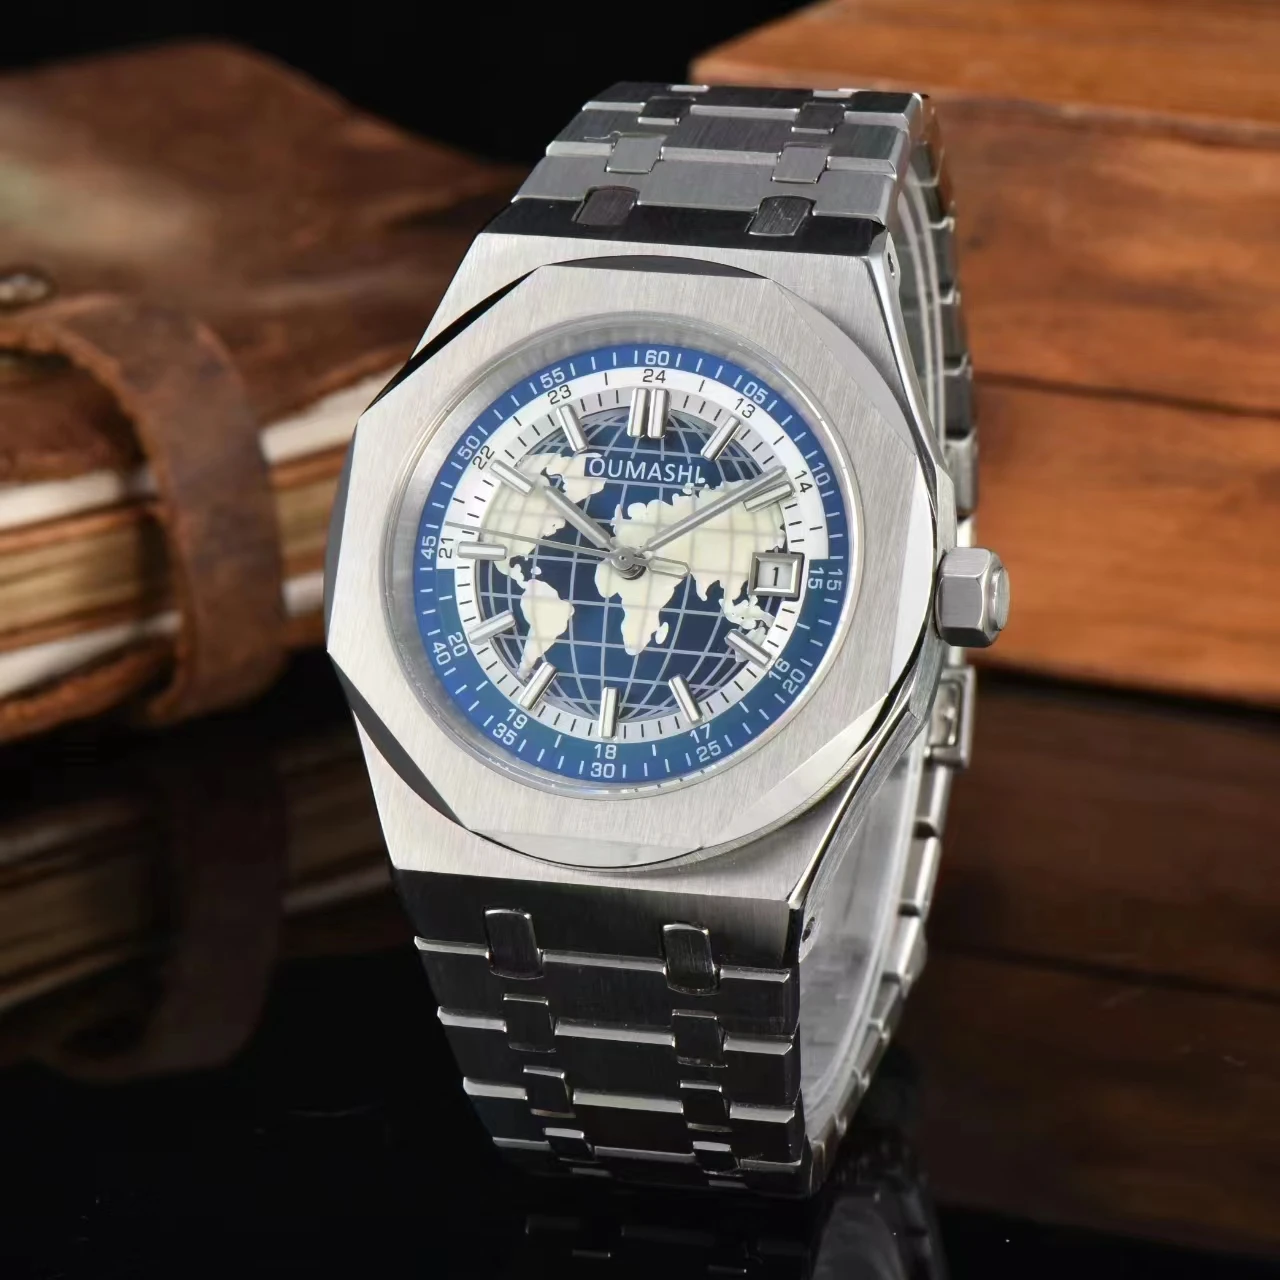 

42mm watch OUMASHI luxury watch sapphire glass Miyota8215 movement men's luminous date watch stainless steel strap/rubber strap